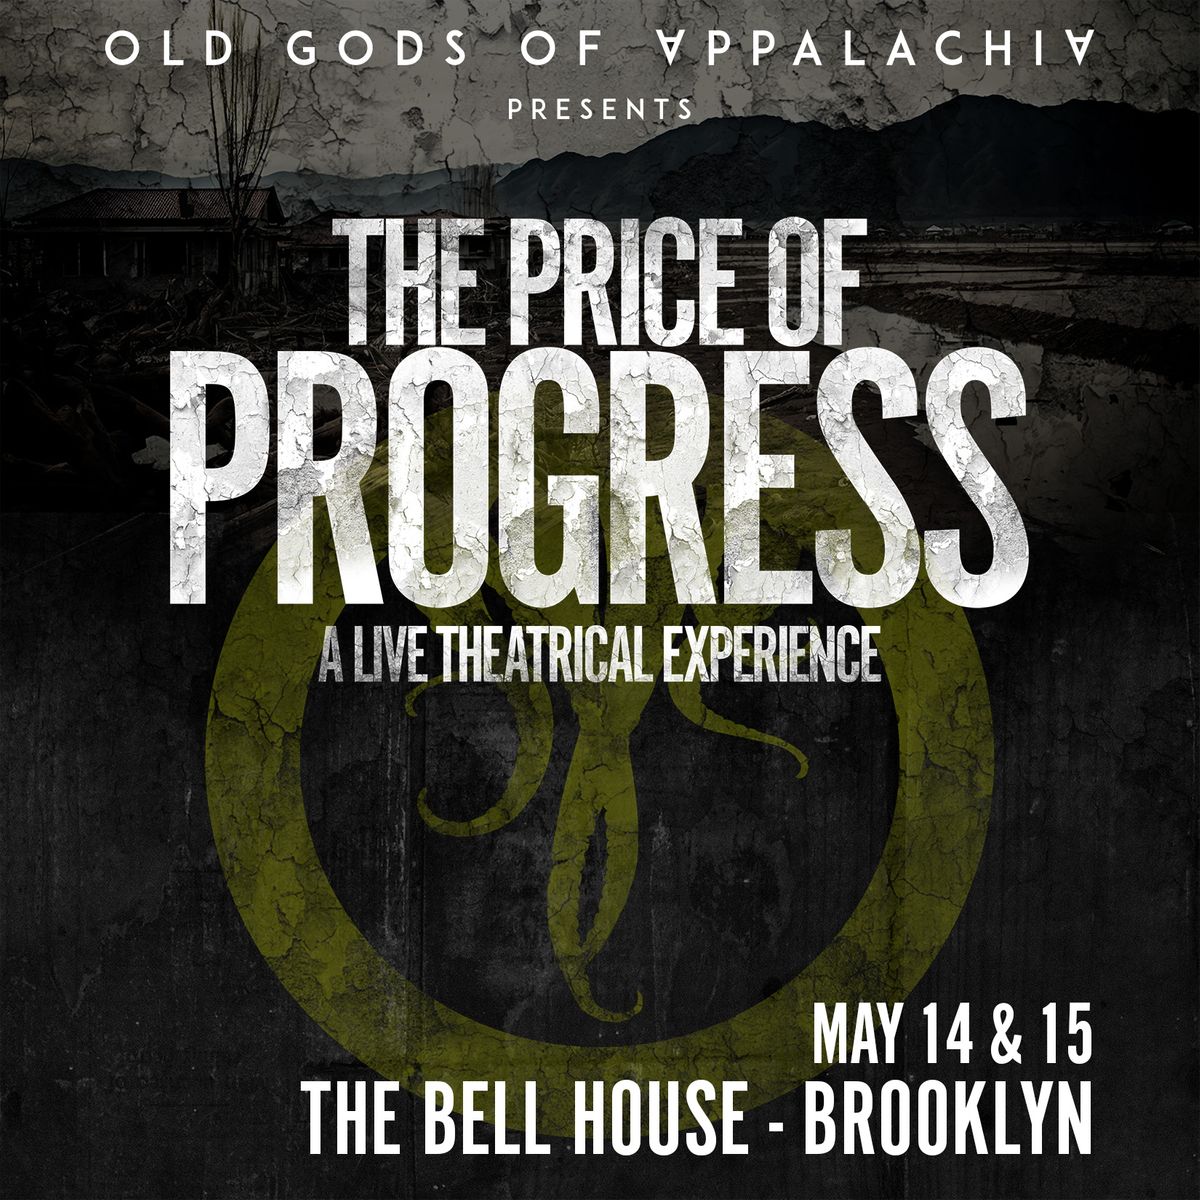 Price of Progress Tour Graphic - square copy.jpg